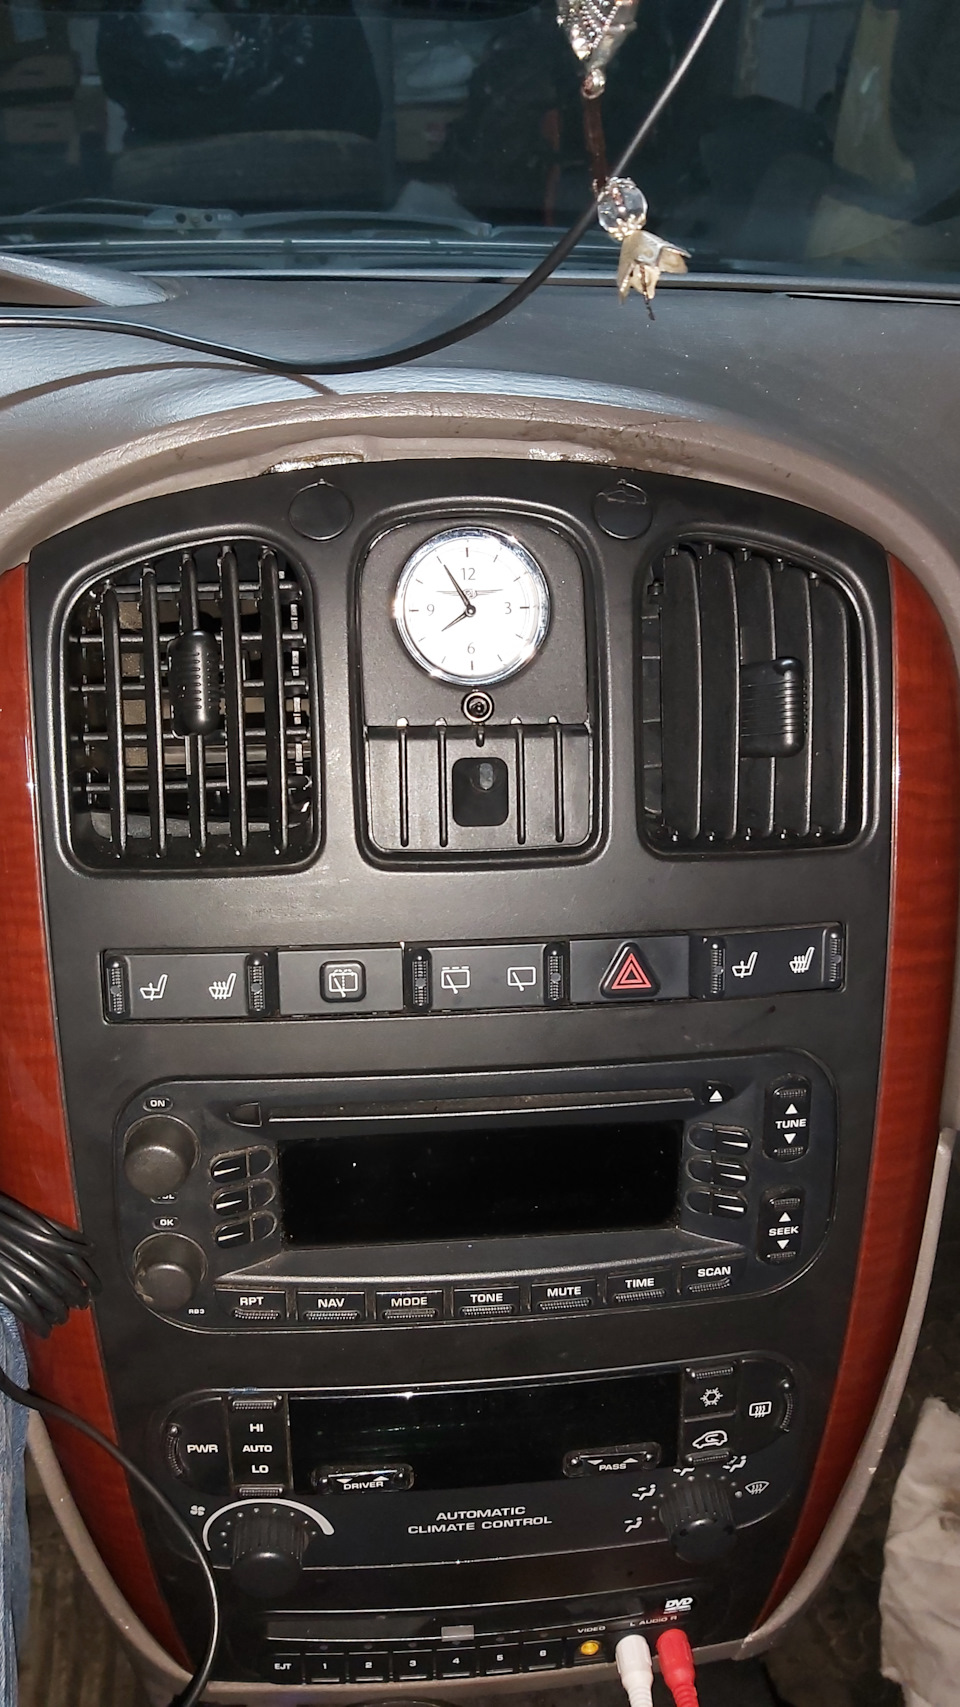 Часики — Chrysler Voyager (4G), 2,5 л, 2003 года | аксессуары | DRIVE2